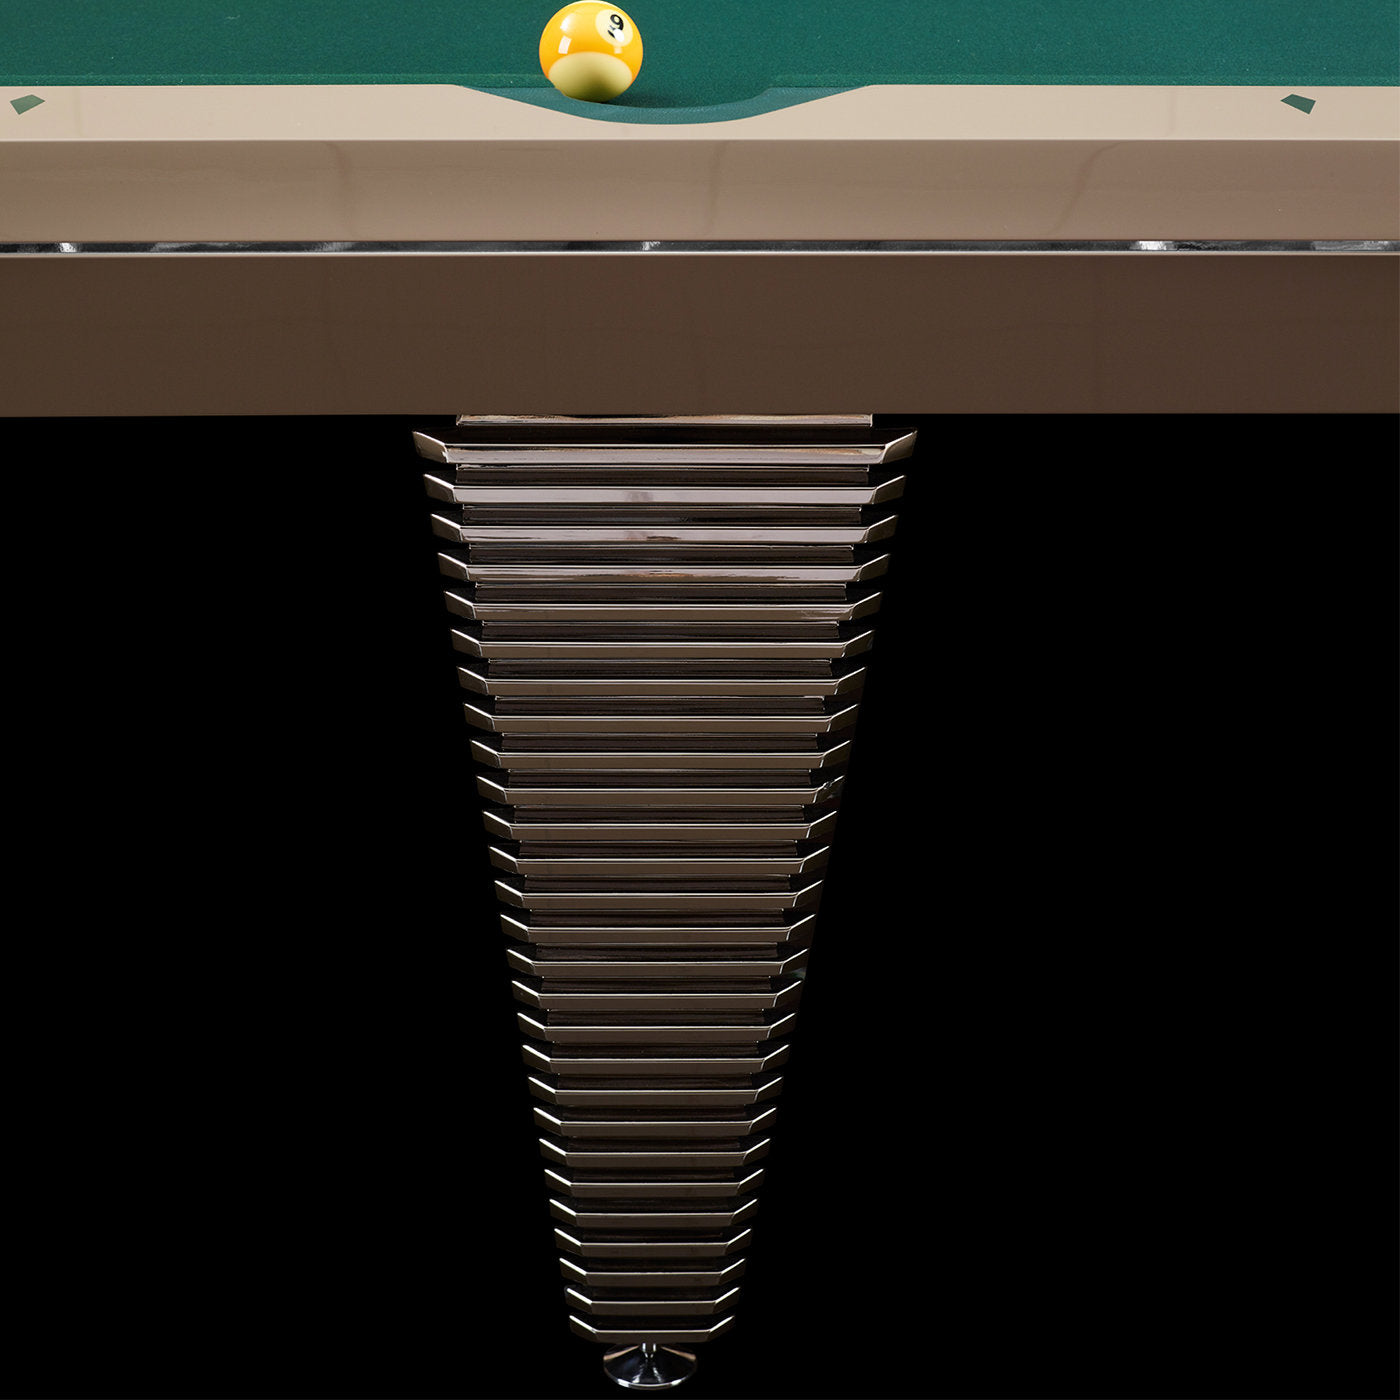 Pyramid Kame Billiard Pool Table - Alternative view 3